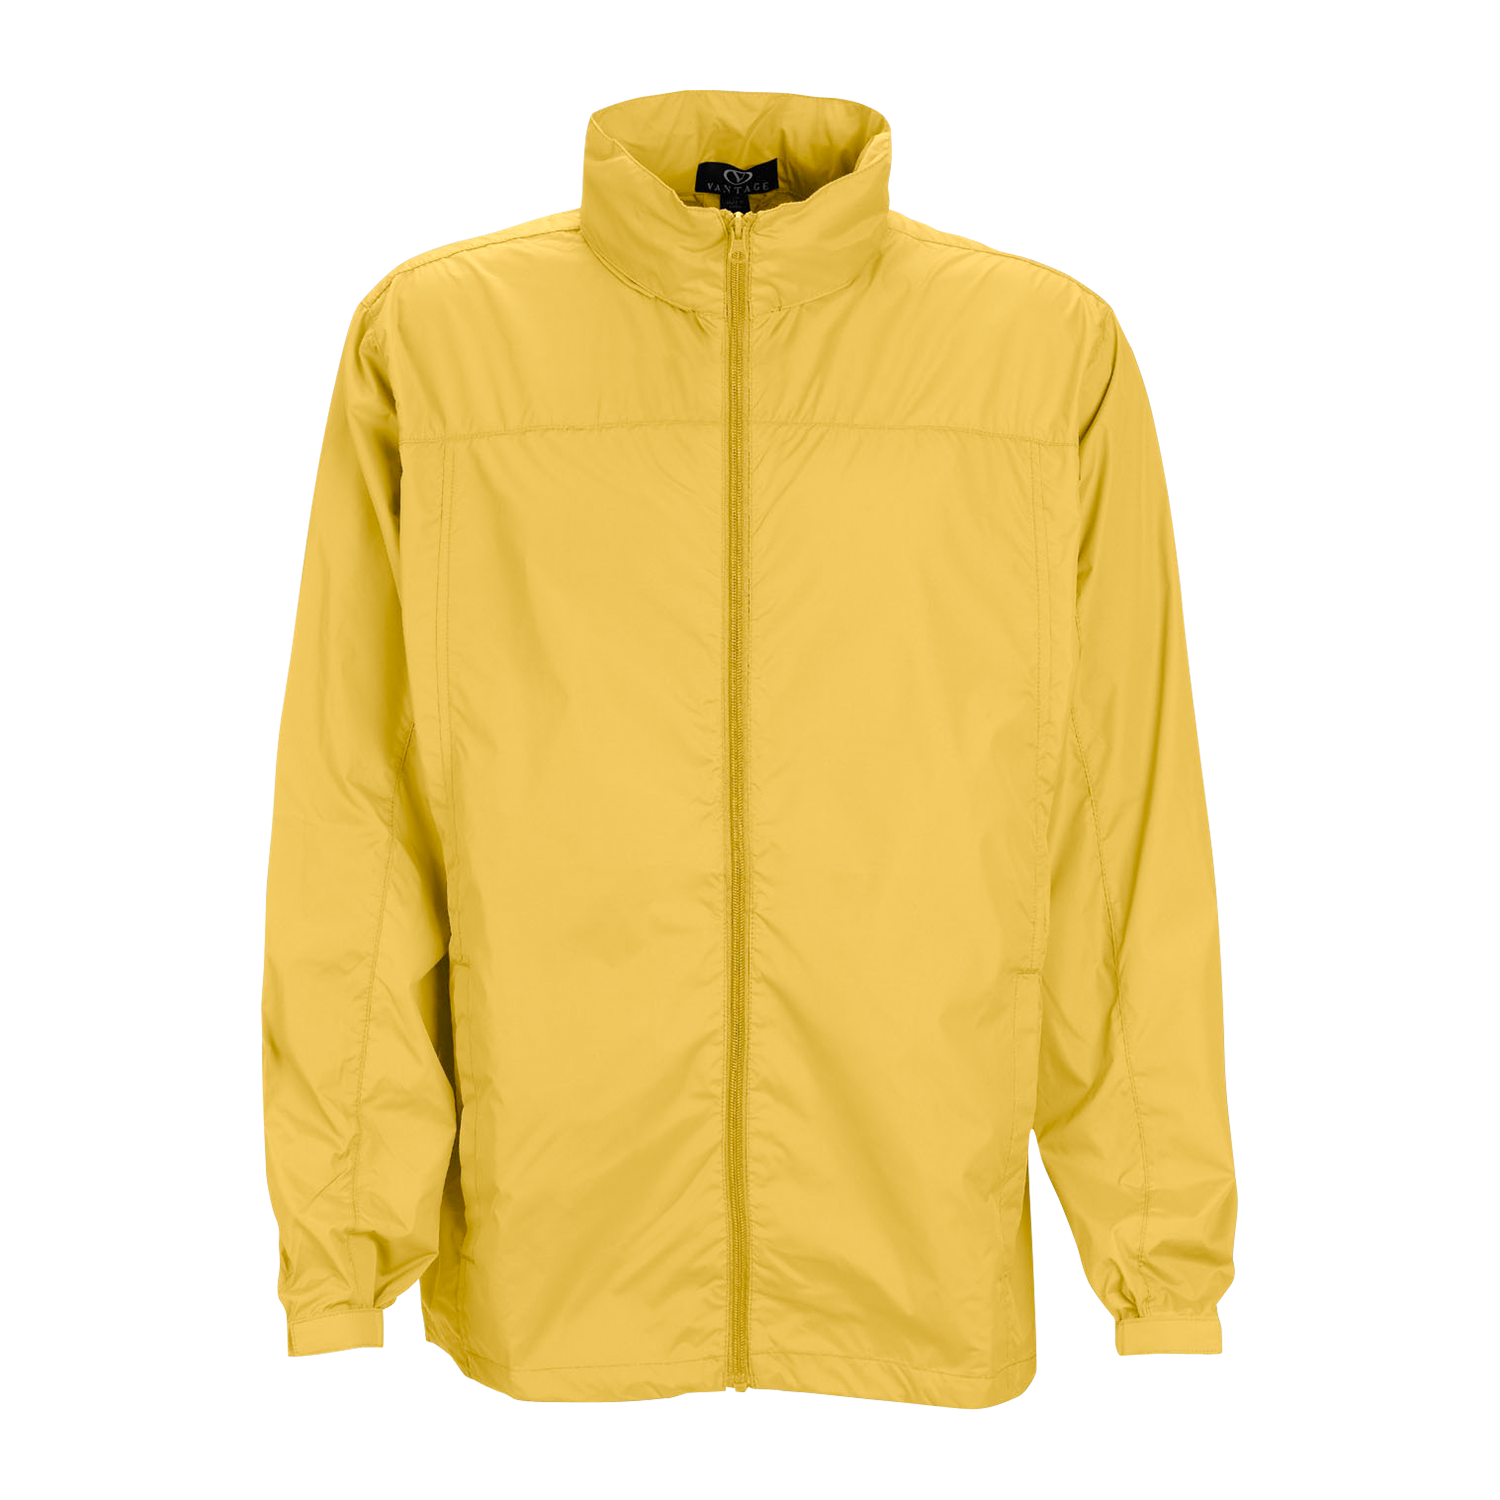 Outerwear|Men's Full-Zip Lightweight Hooded Jacket|Vantage